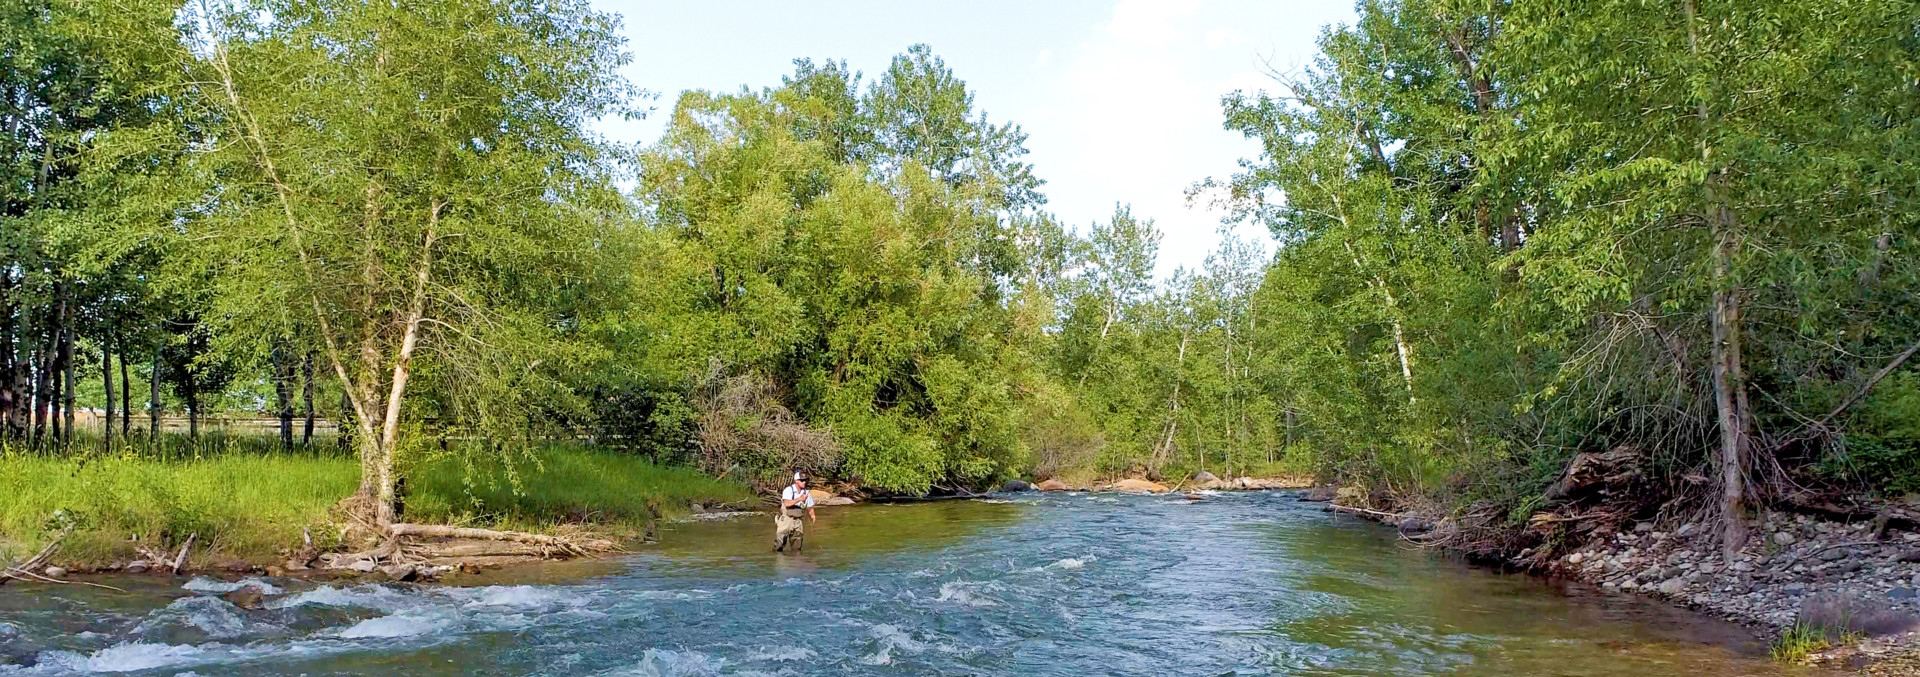 fishing-the-west-boulder-river-mcleod-montana